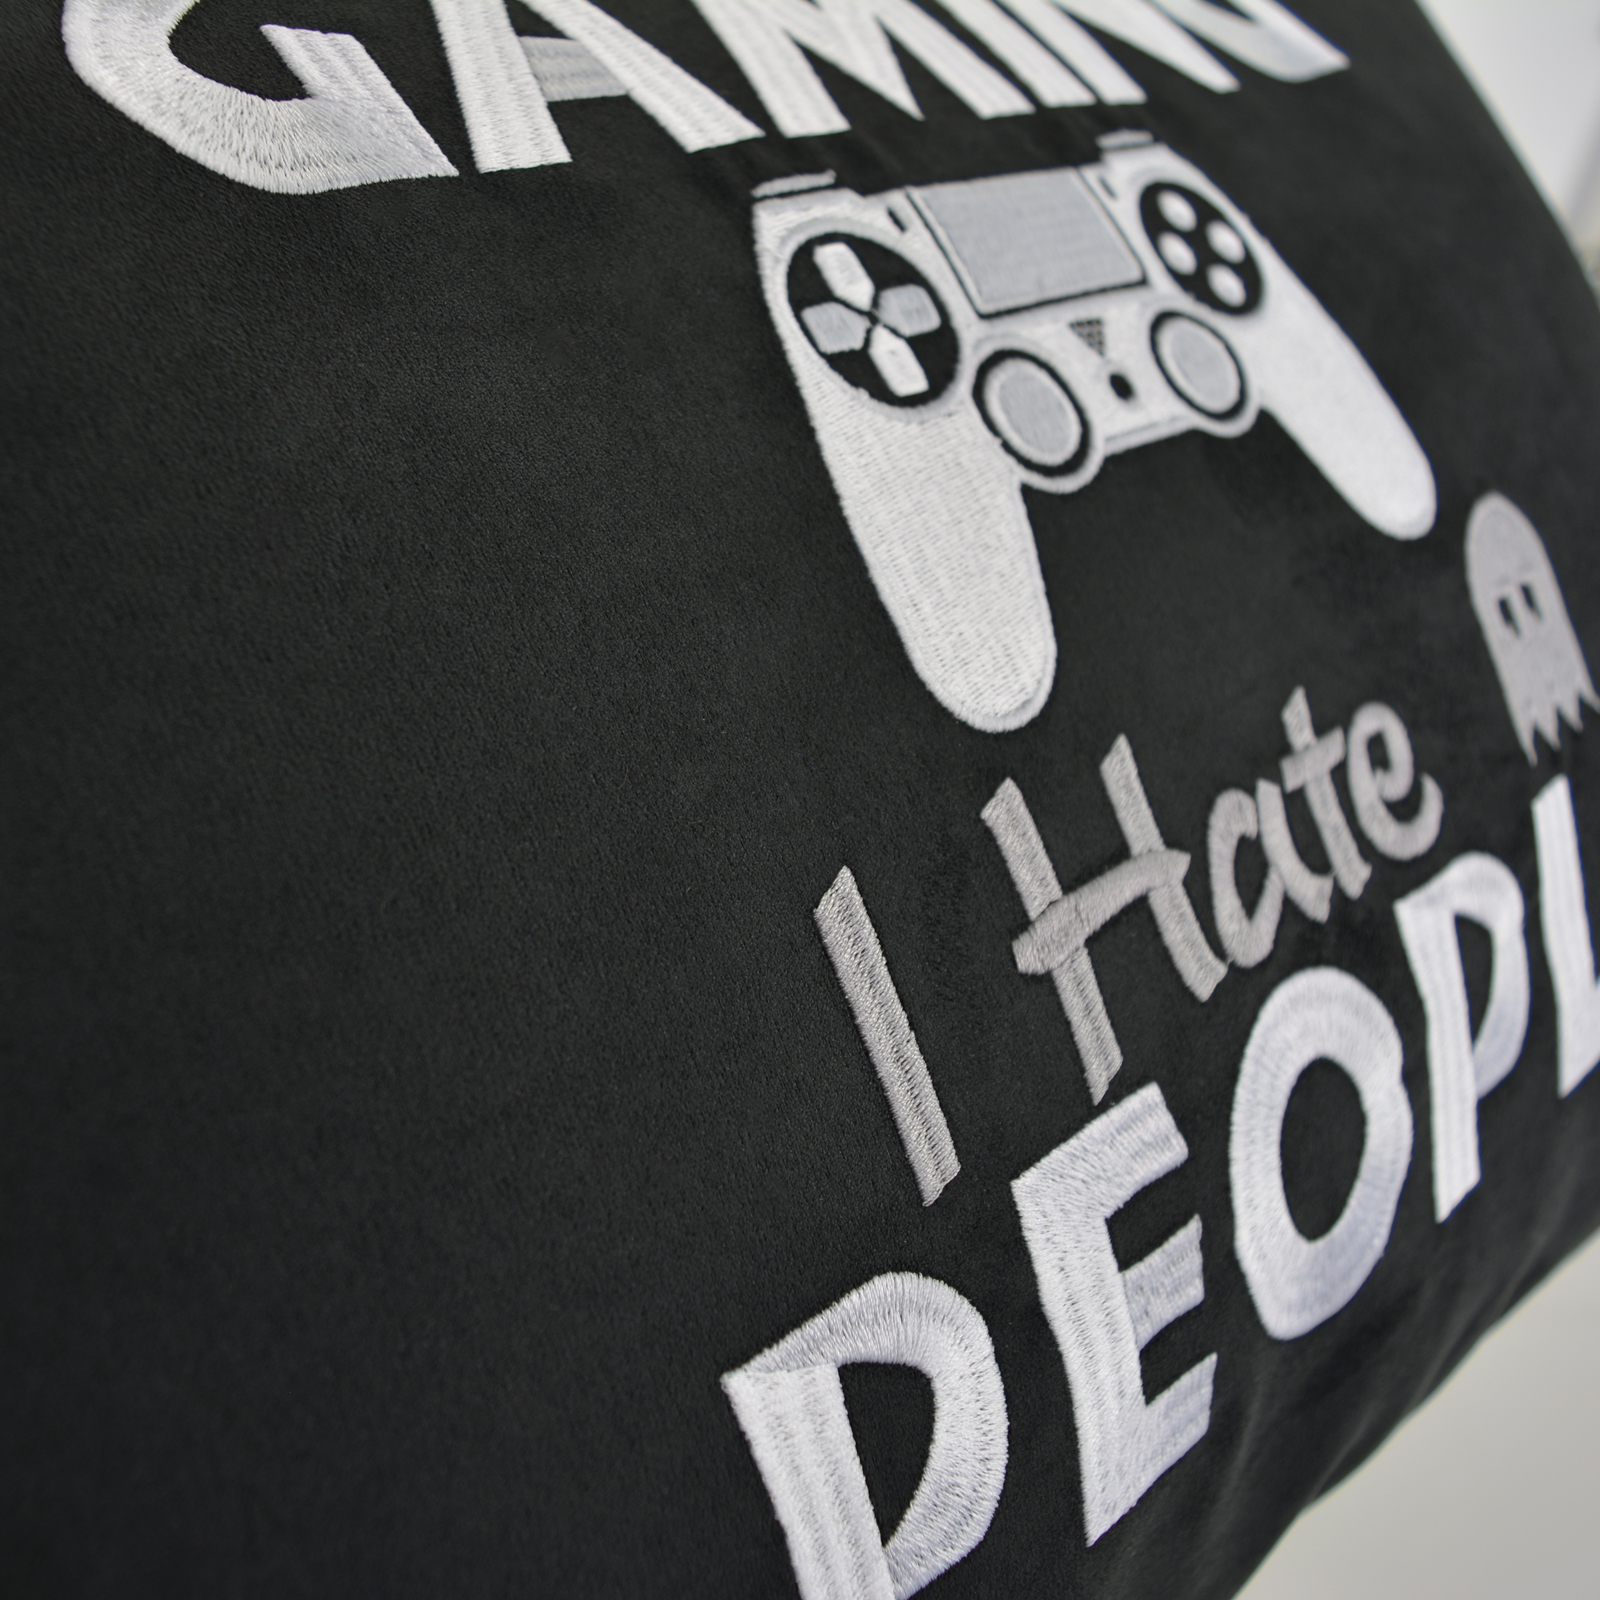 I Love gaming - I hate people - Kissen
